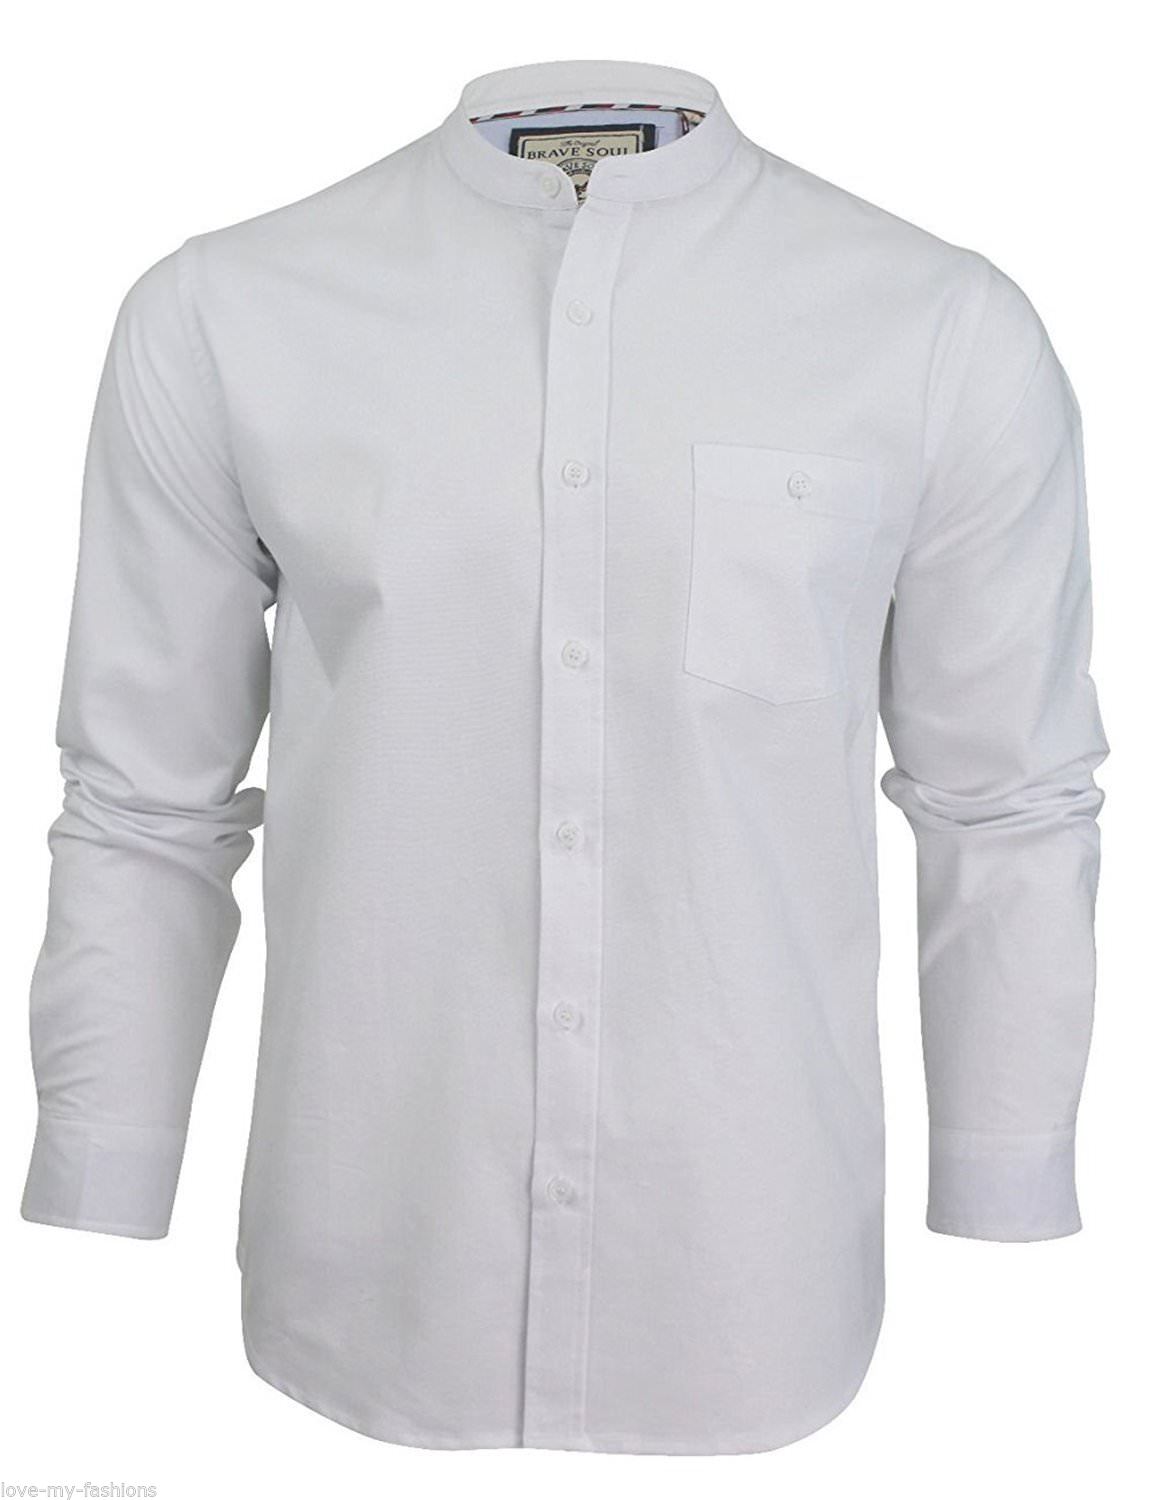 Mens Casual brave soul Mandarin Collar Long Sleeves Shirts ButtonUp Slim Fit Top